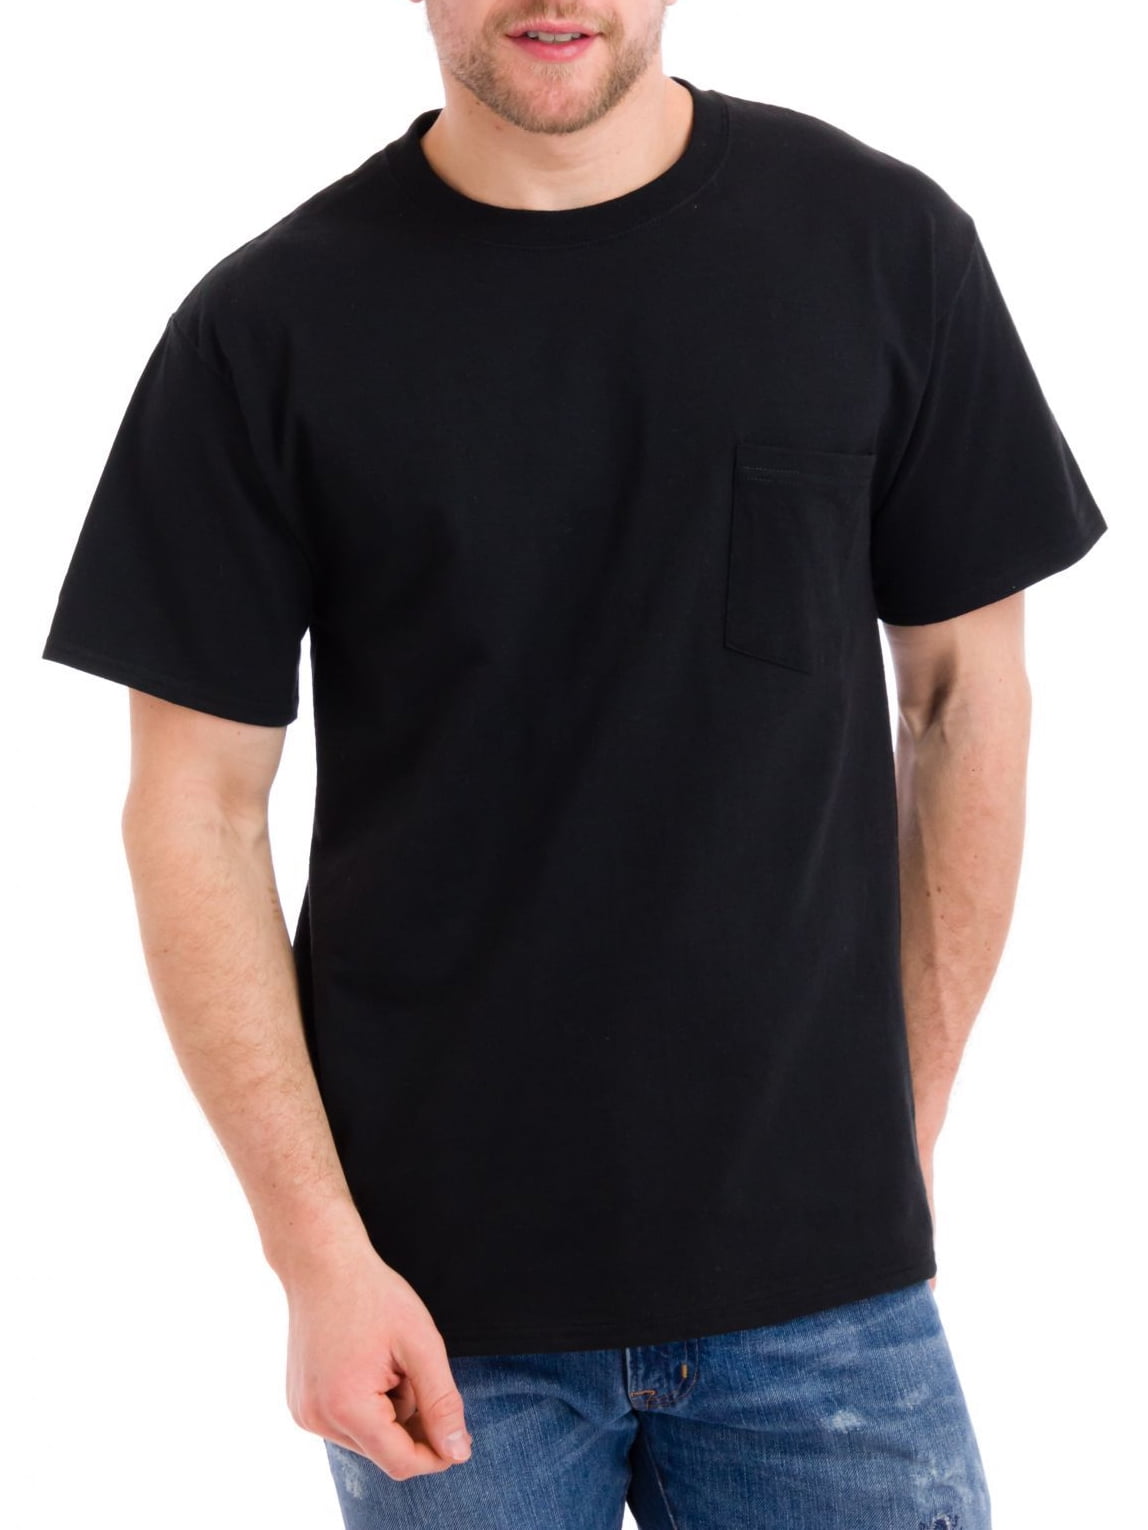 Hanes - Hanes Men's Tagless Pocket T-Shirt, Black, Small - Walmart.com ...